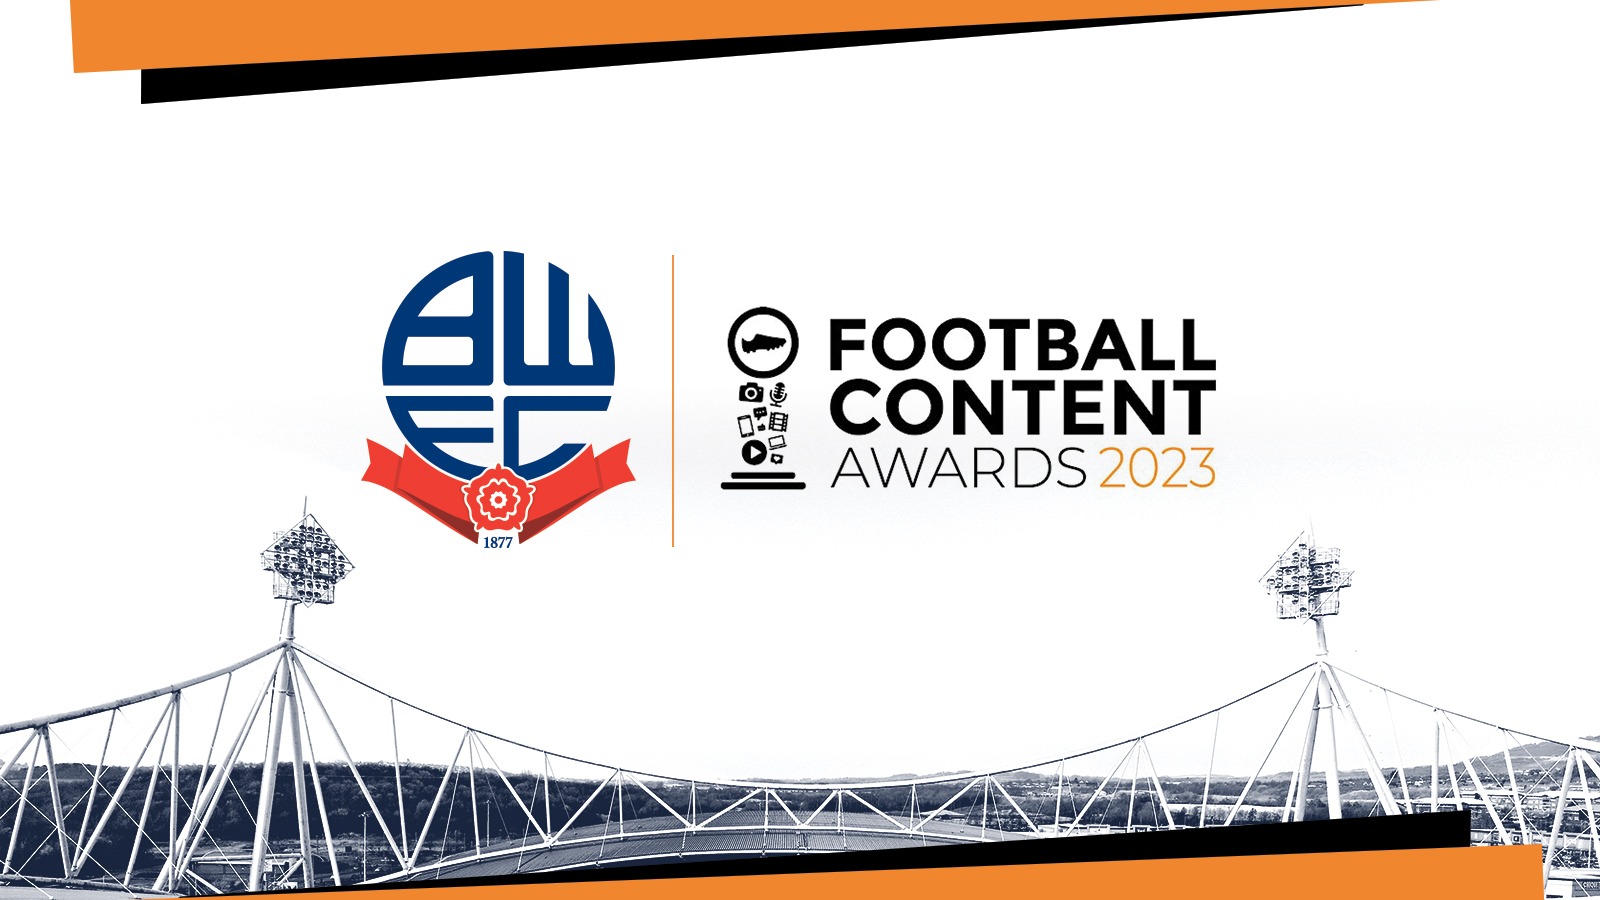 Football Content Awards